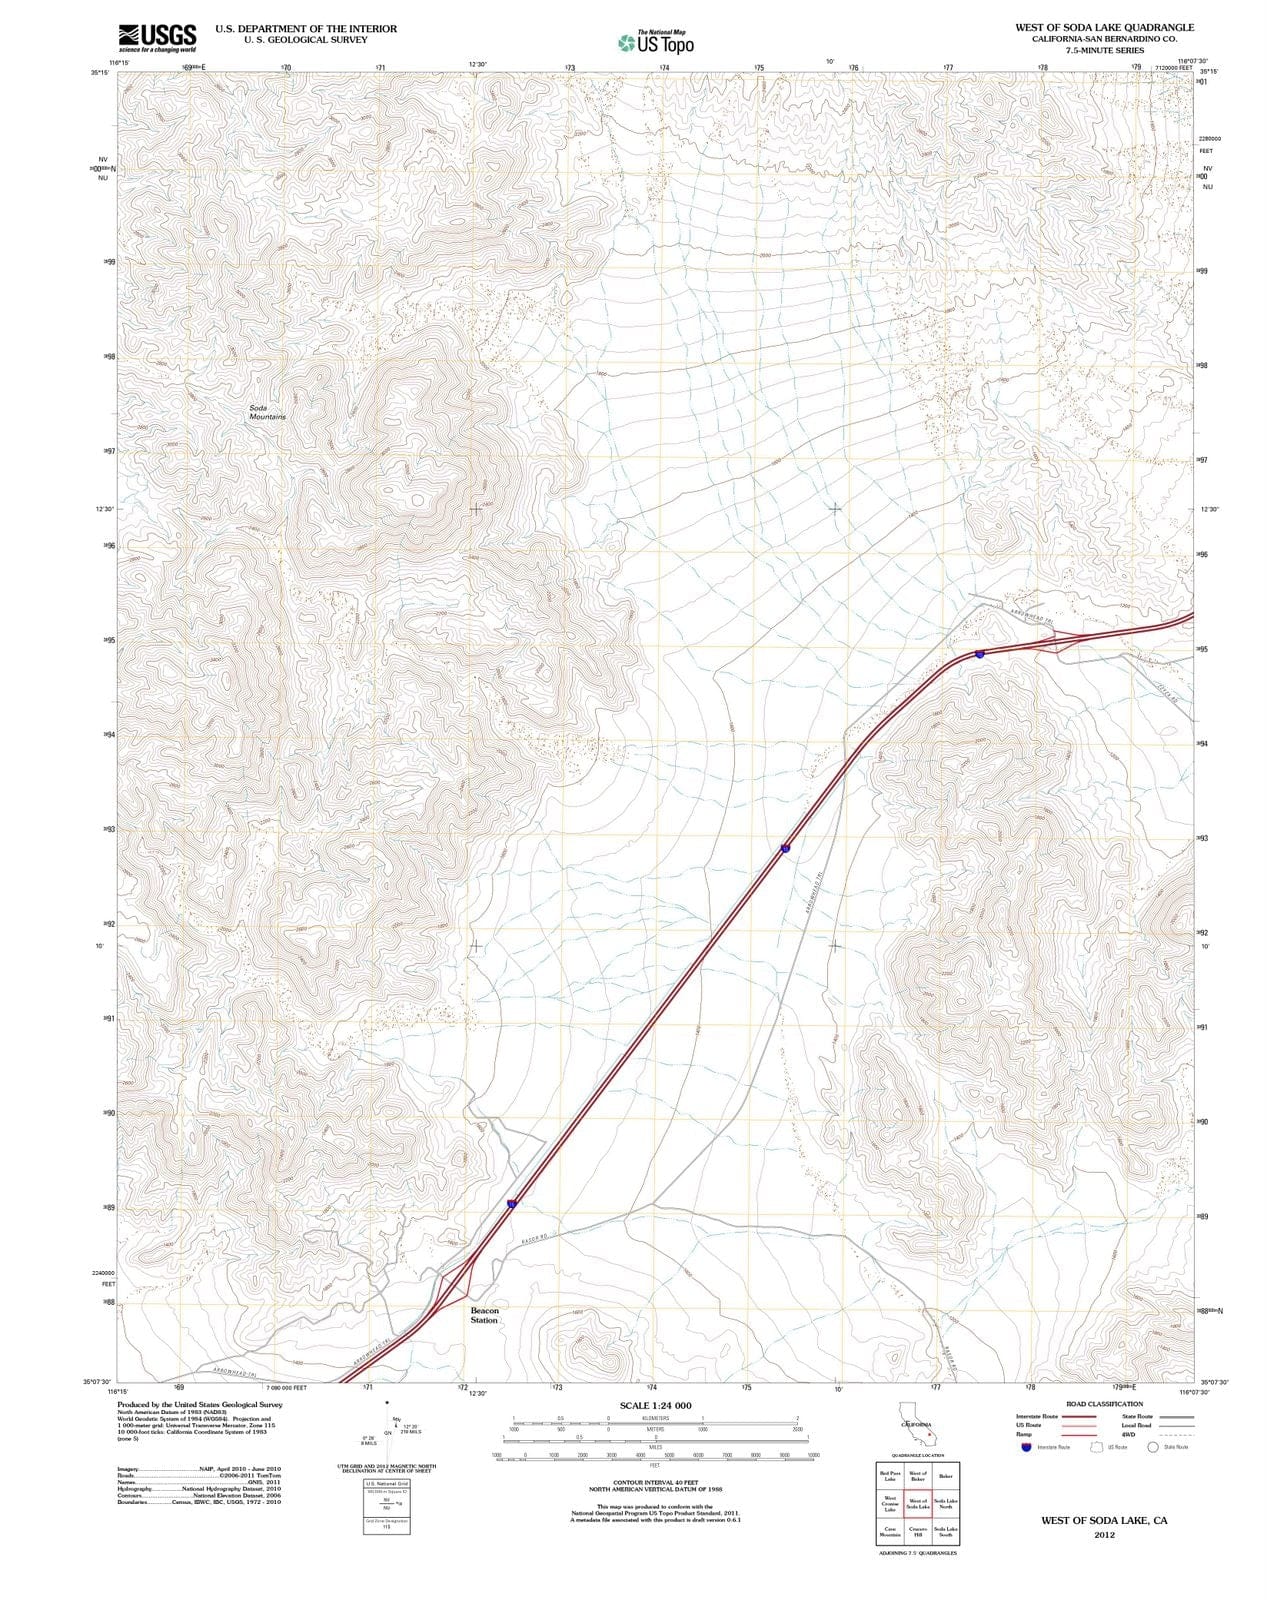 2012 West of Soda Lake, CA - California - USGS Topographic Map